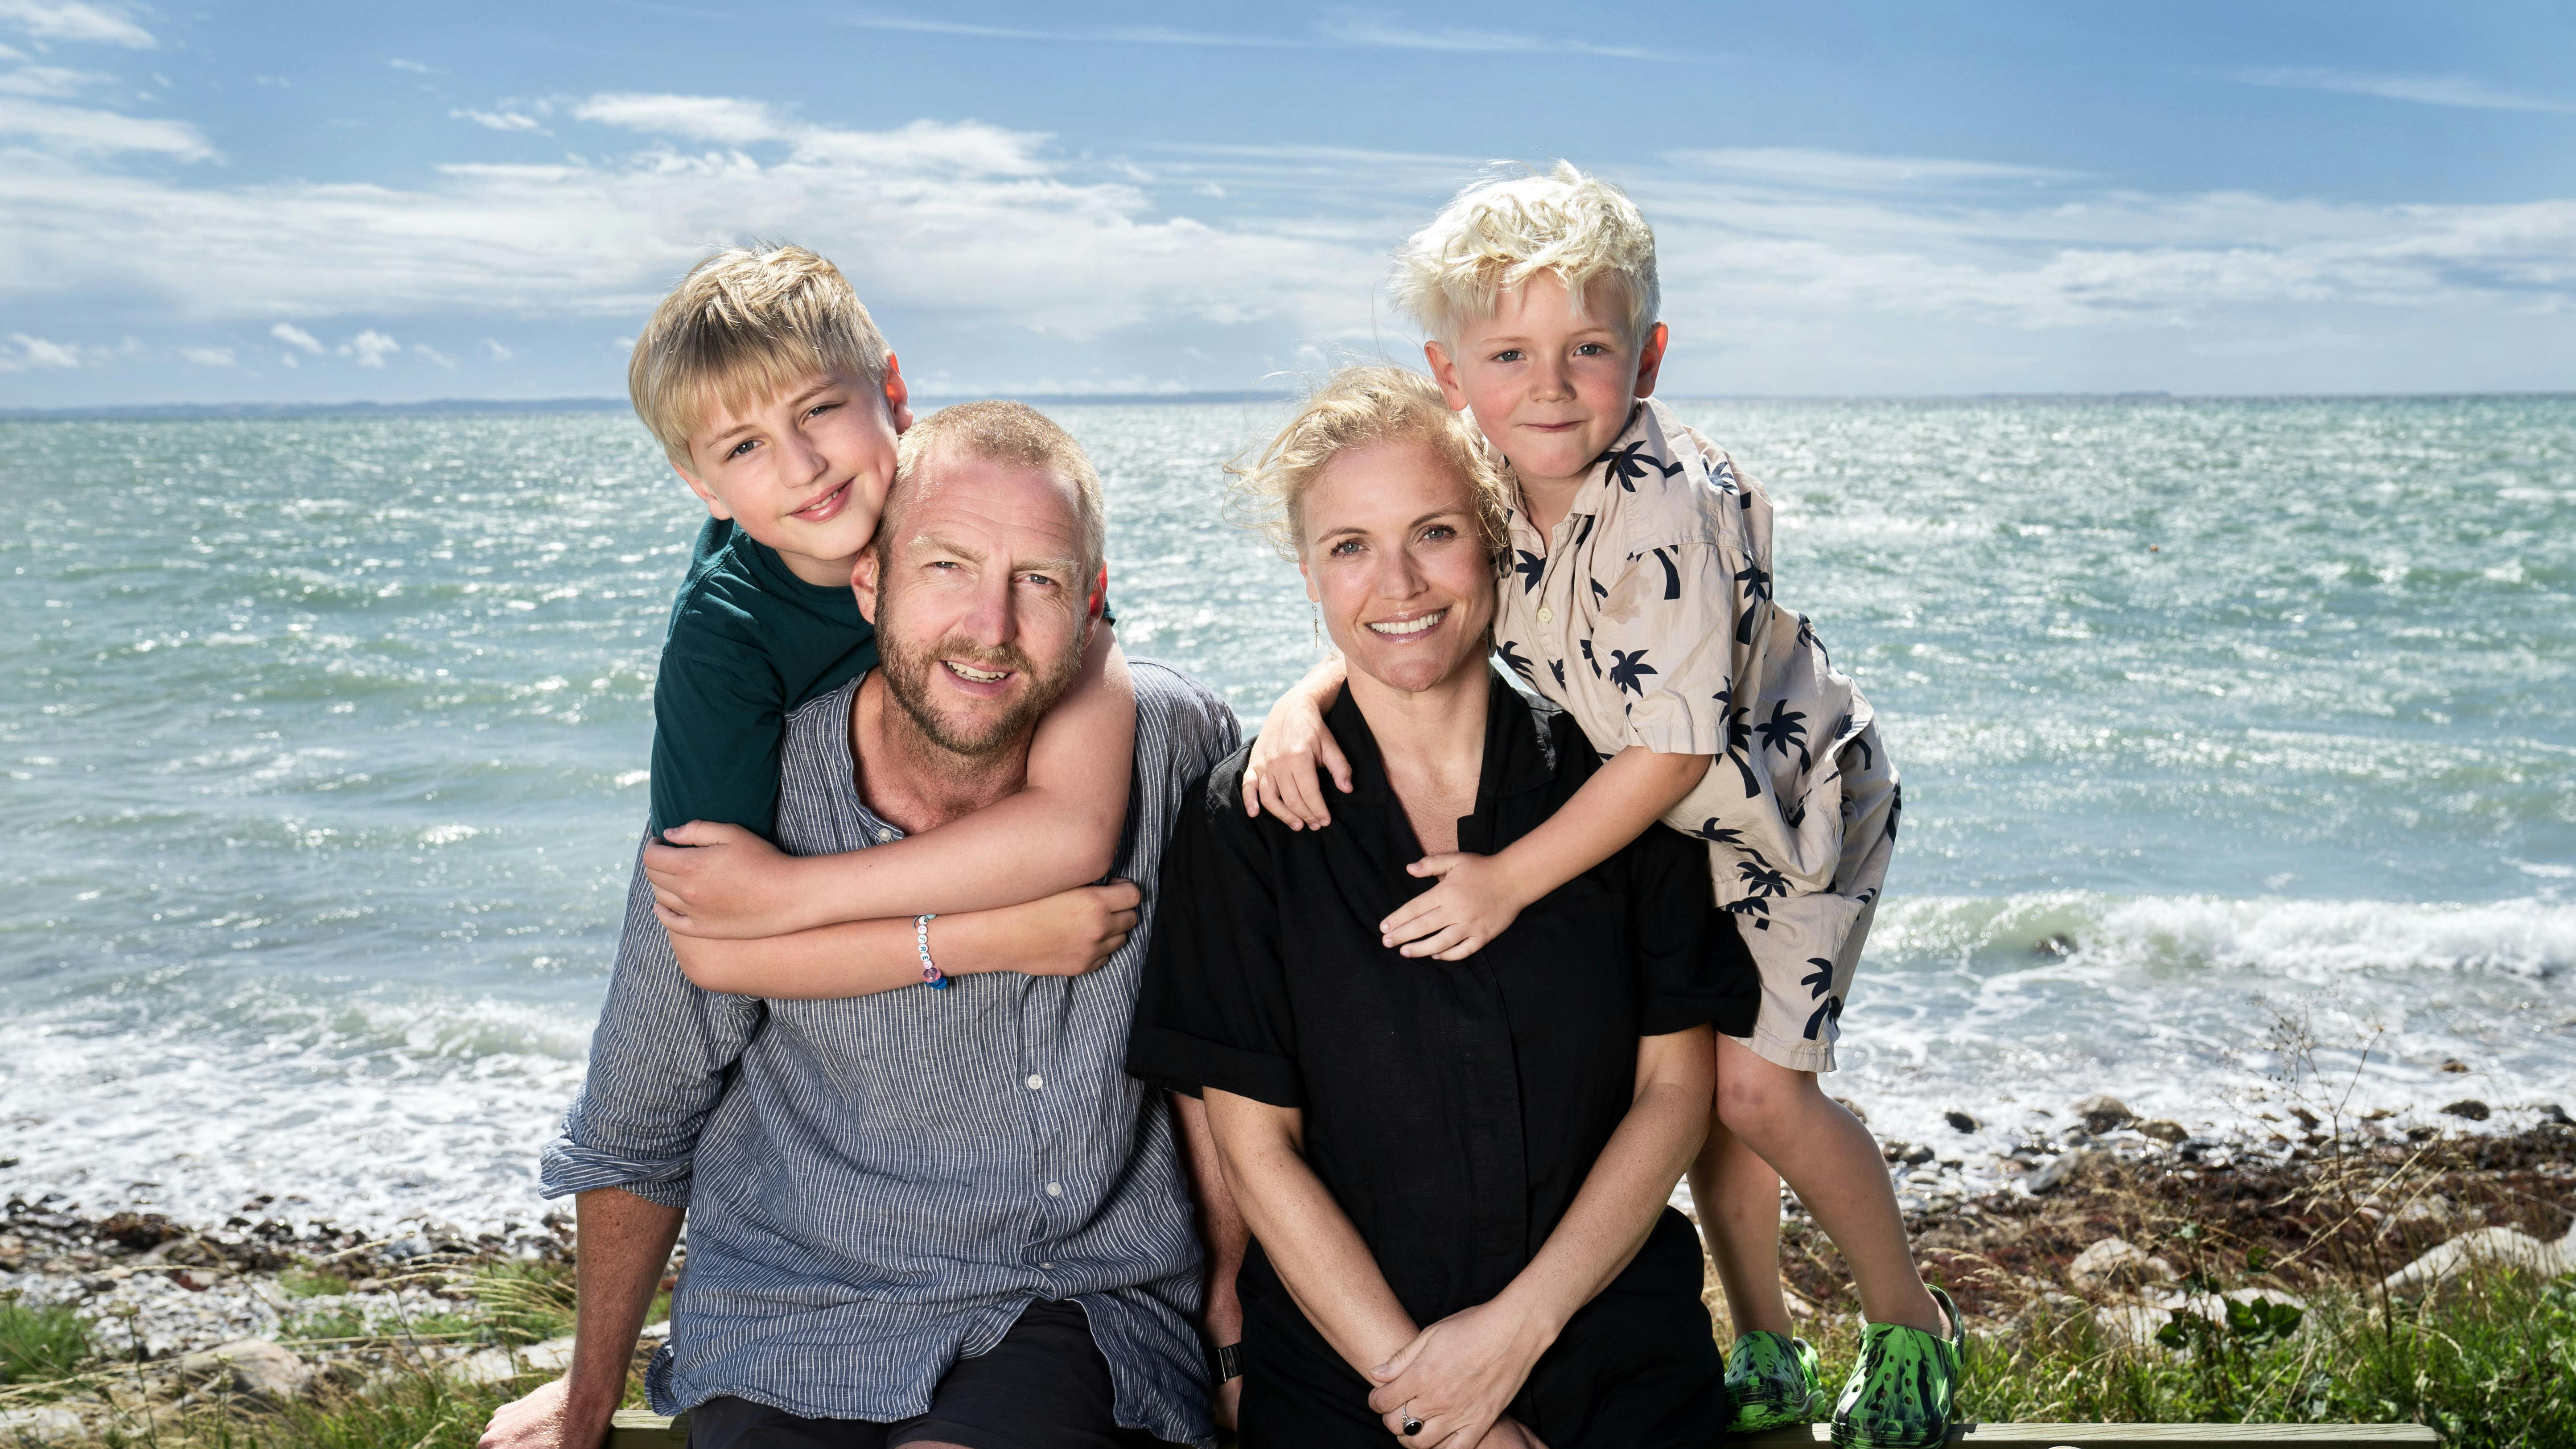 Instruktørerne bag dokumentarfilmen "Munken", Mira Jargil og Christian Sønderby Jepsen, med deres børn Alfred og Noor.